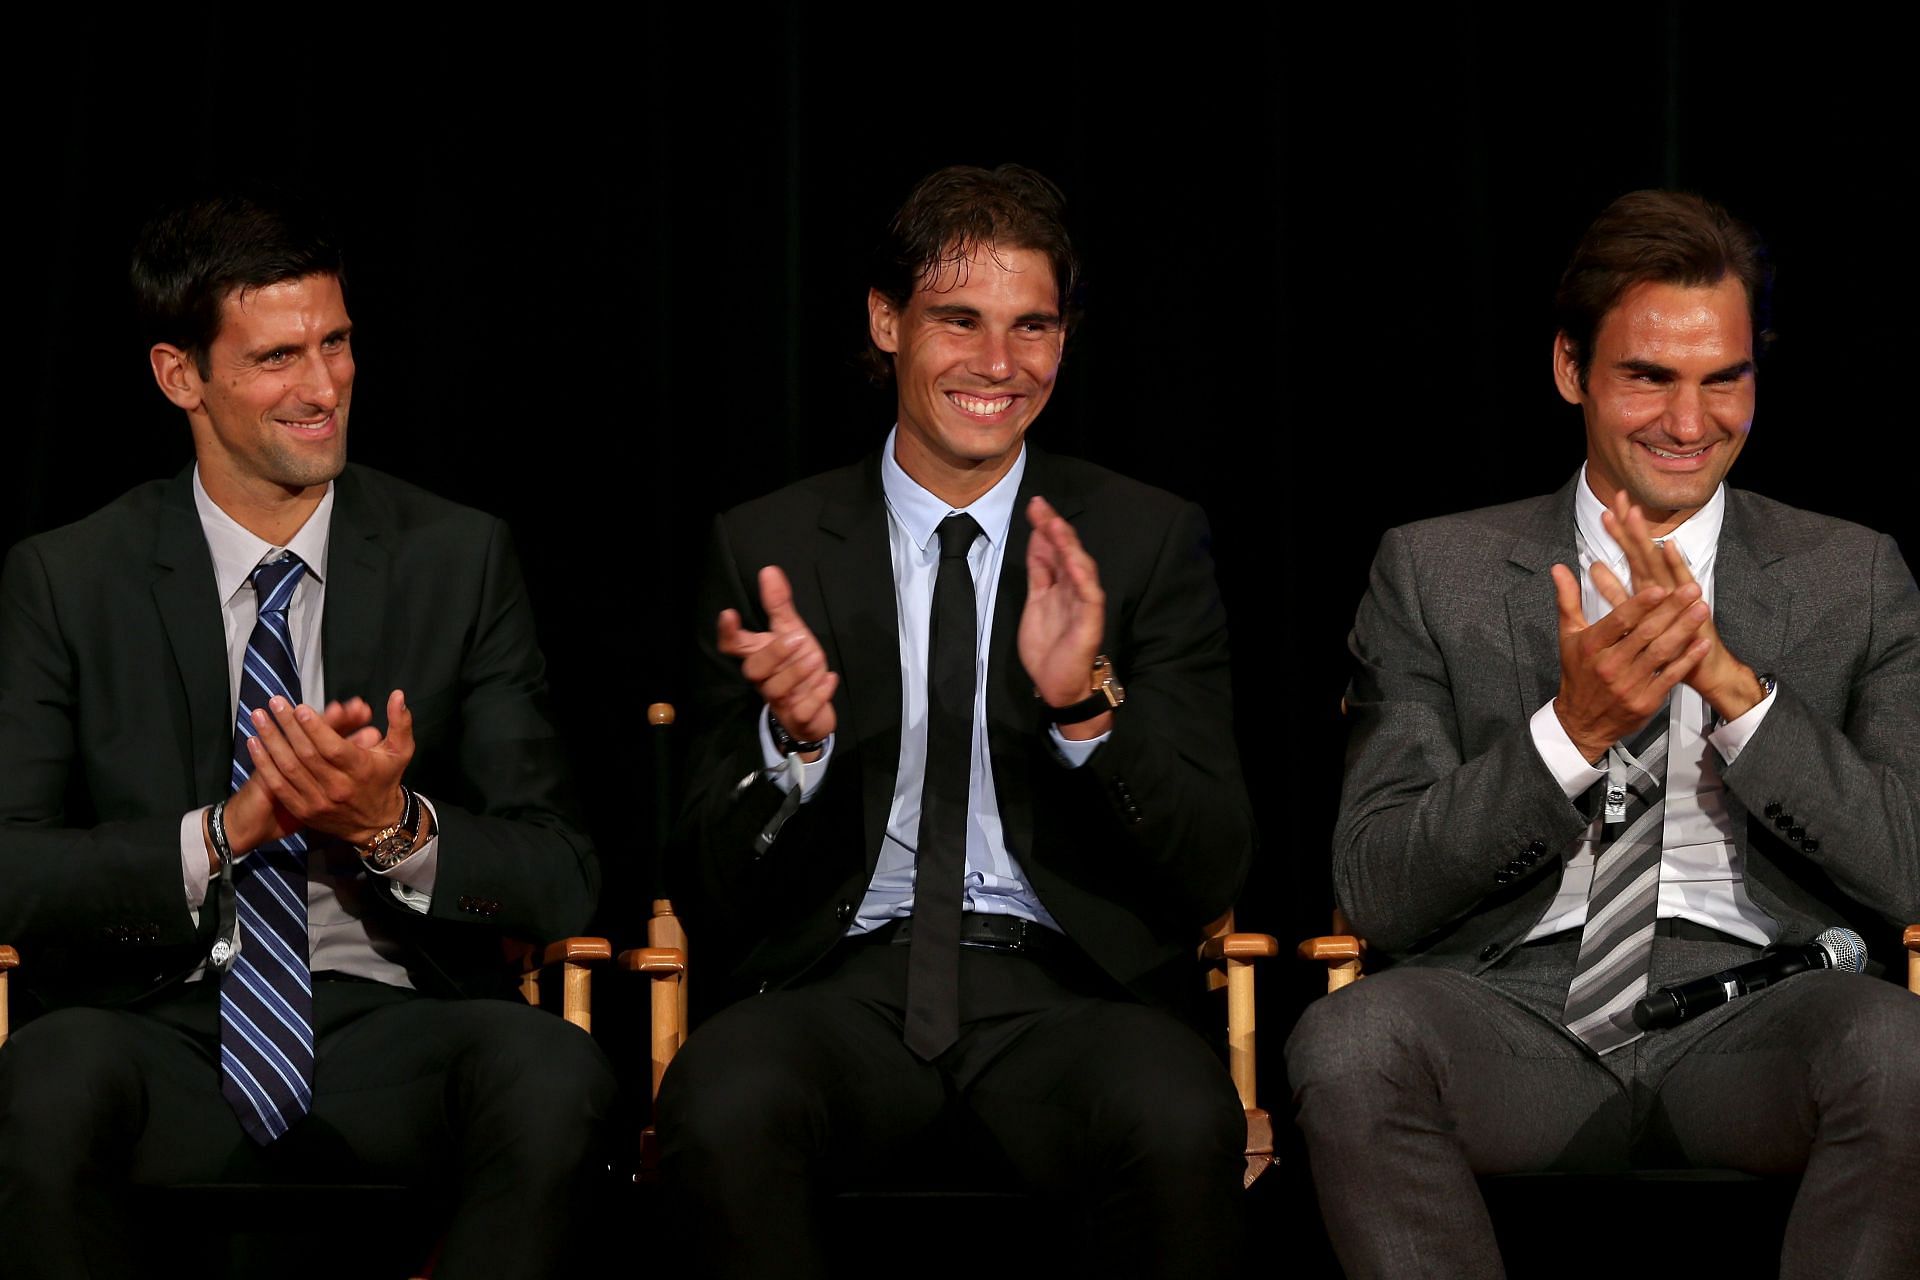 Roger Federer, Rafael Nadal and Novak Djokovic are a part of the GOAT debate